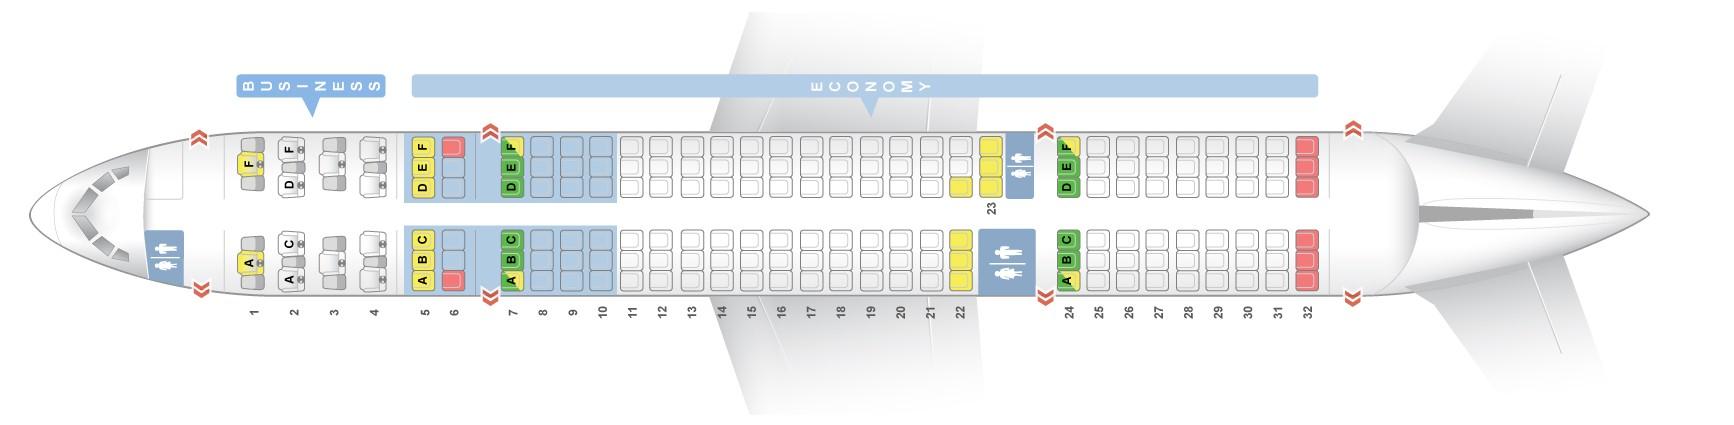 Aer Lingus Airplane Seating Chart